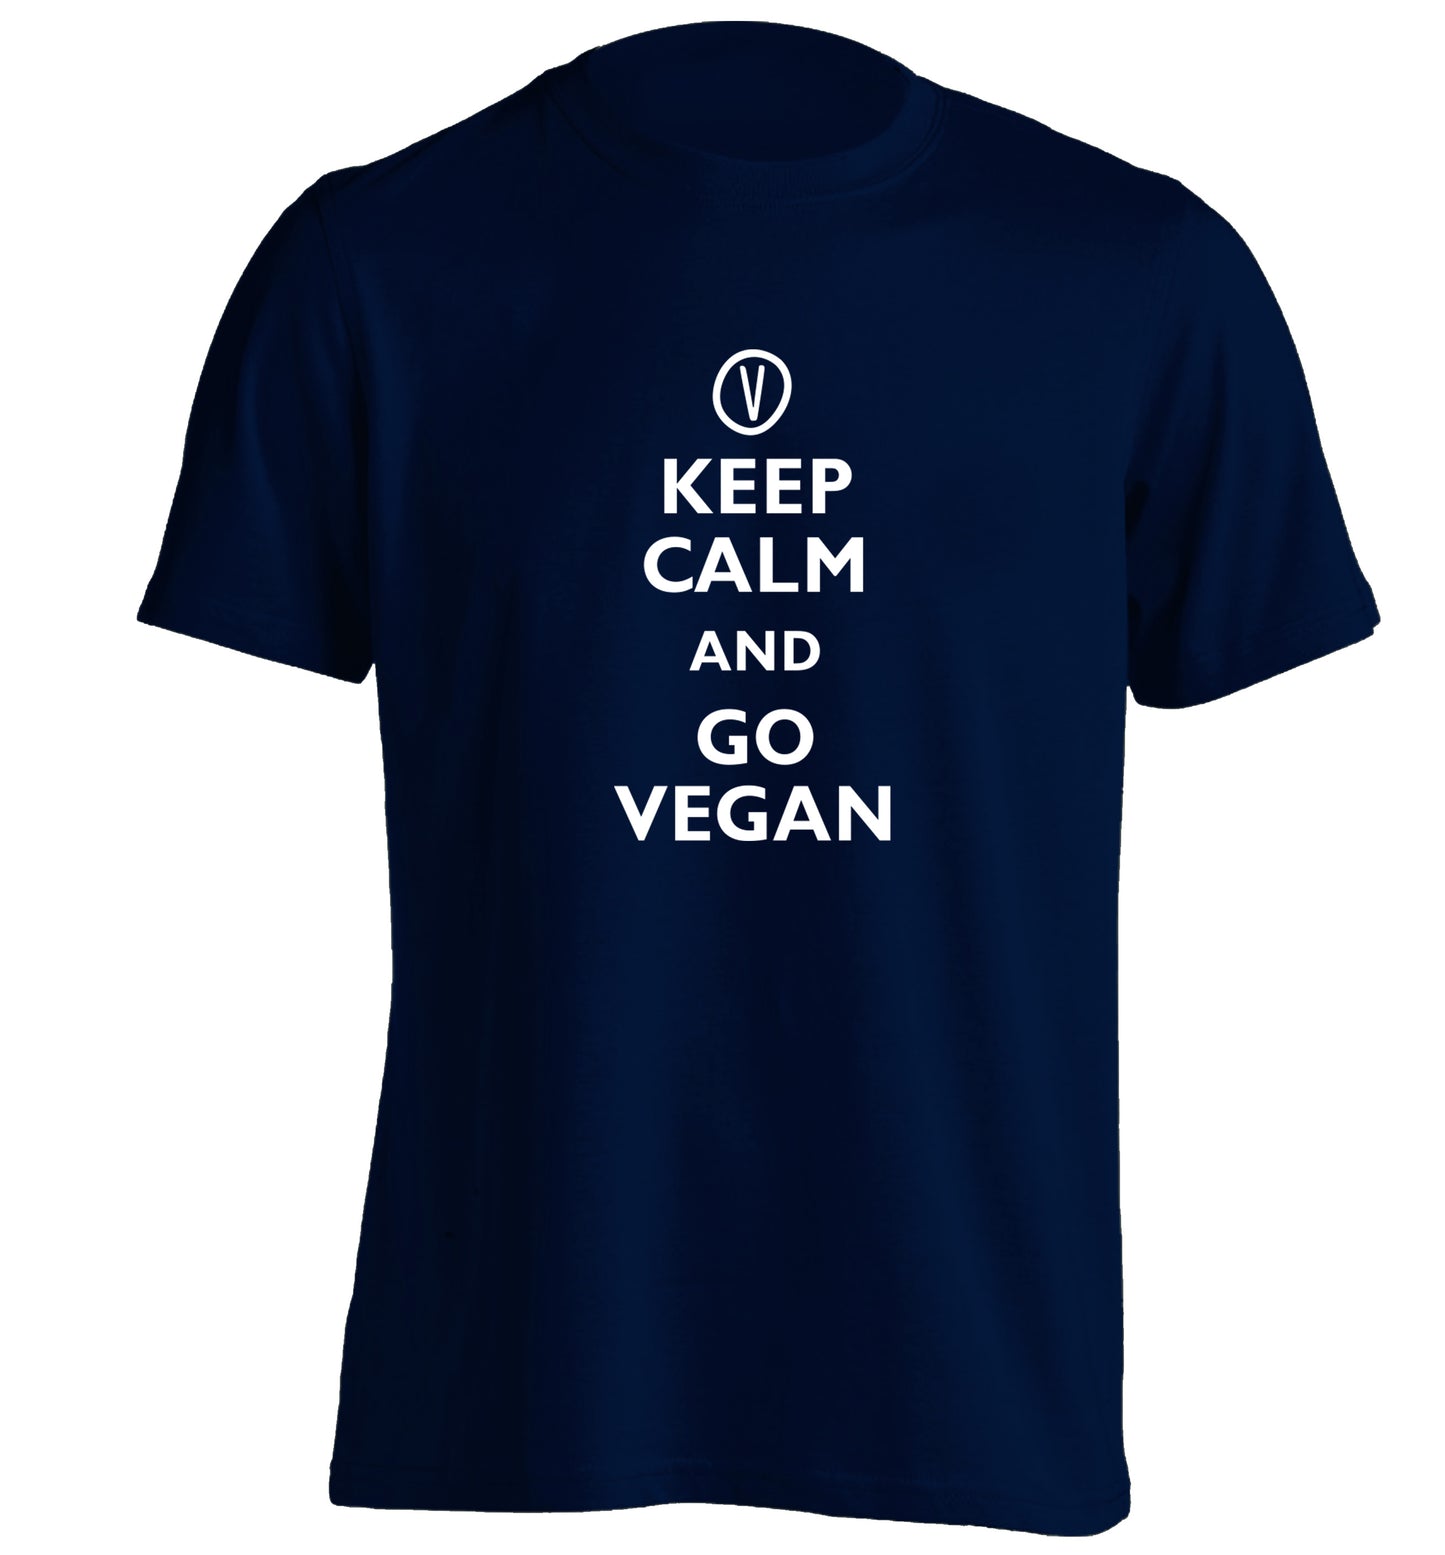 Keep calm and go vegan adults unisex navy Tshirt 2XL